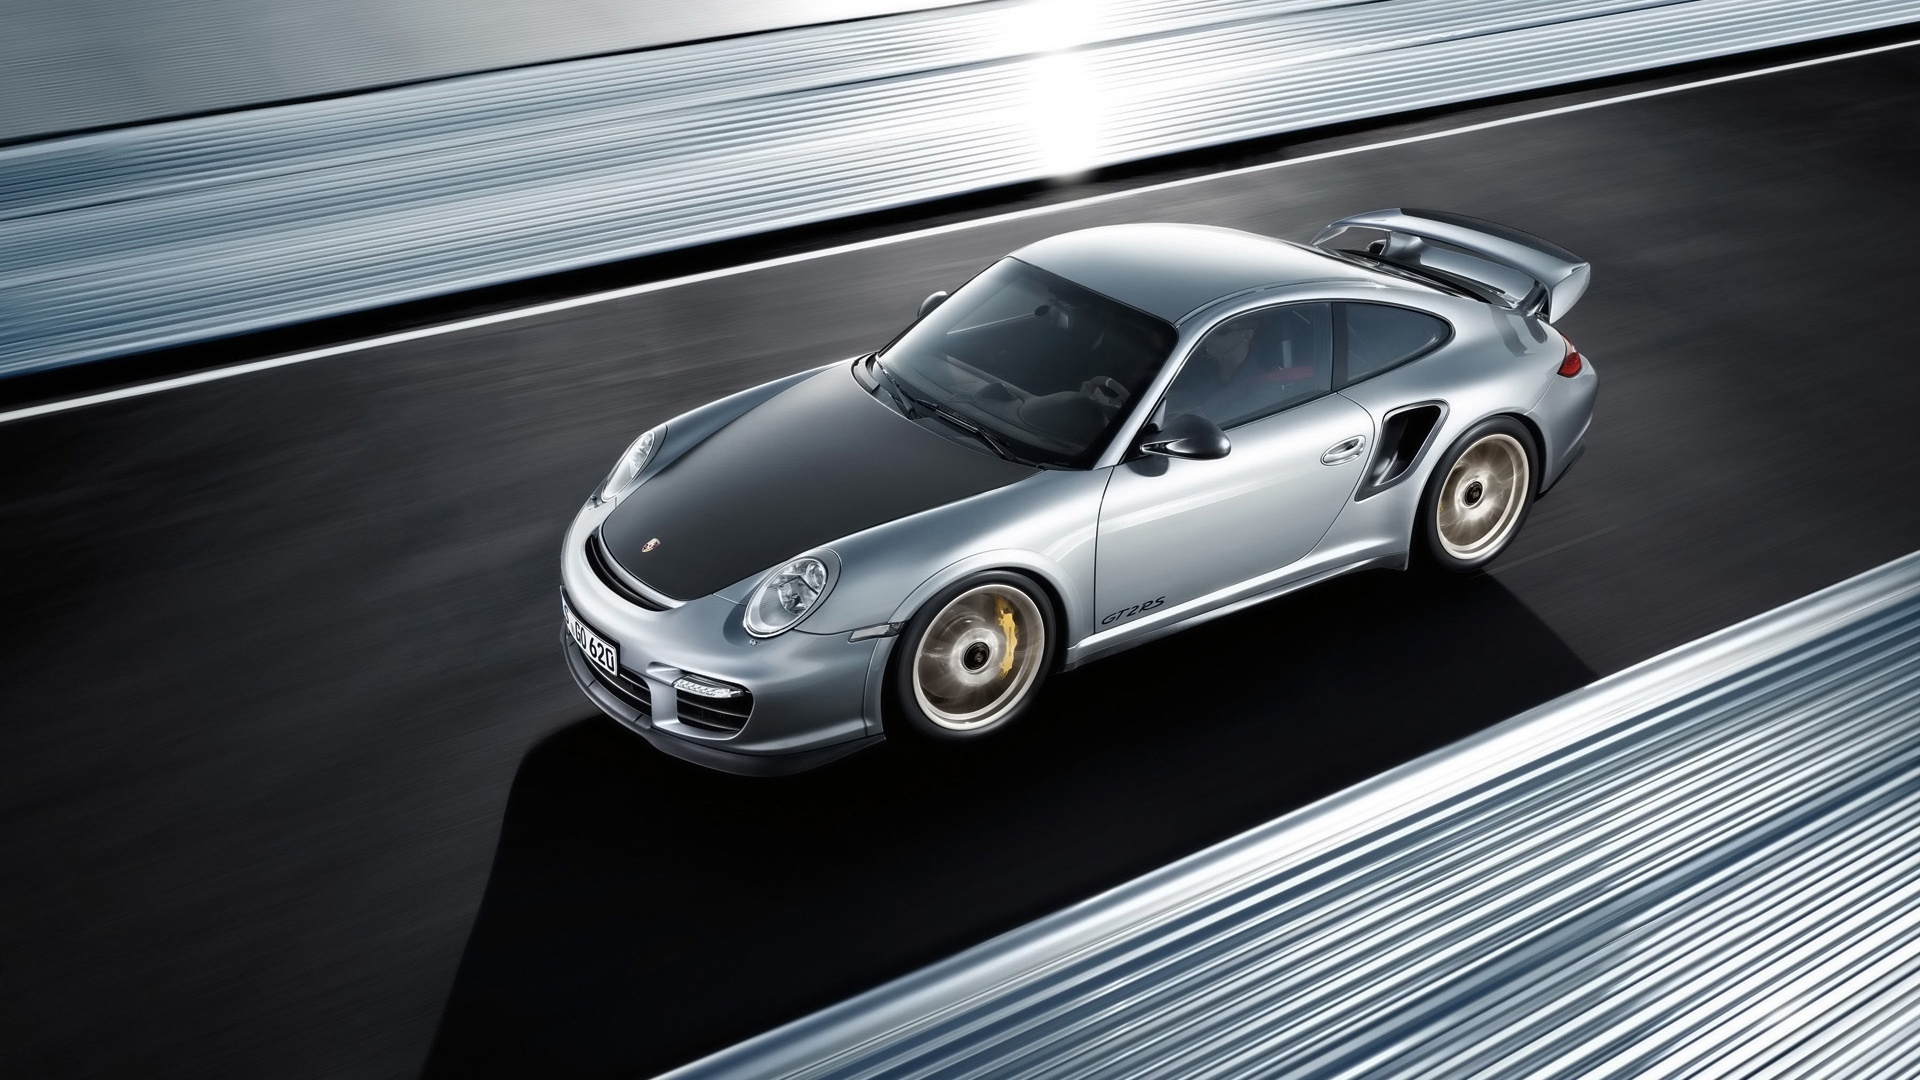 Porsche 911 GT2 RS 2011 for 1920 x 1080 HDTV 1080p resolution